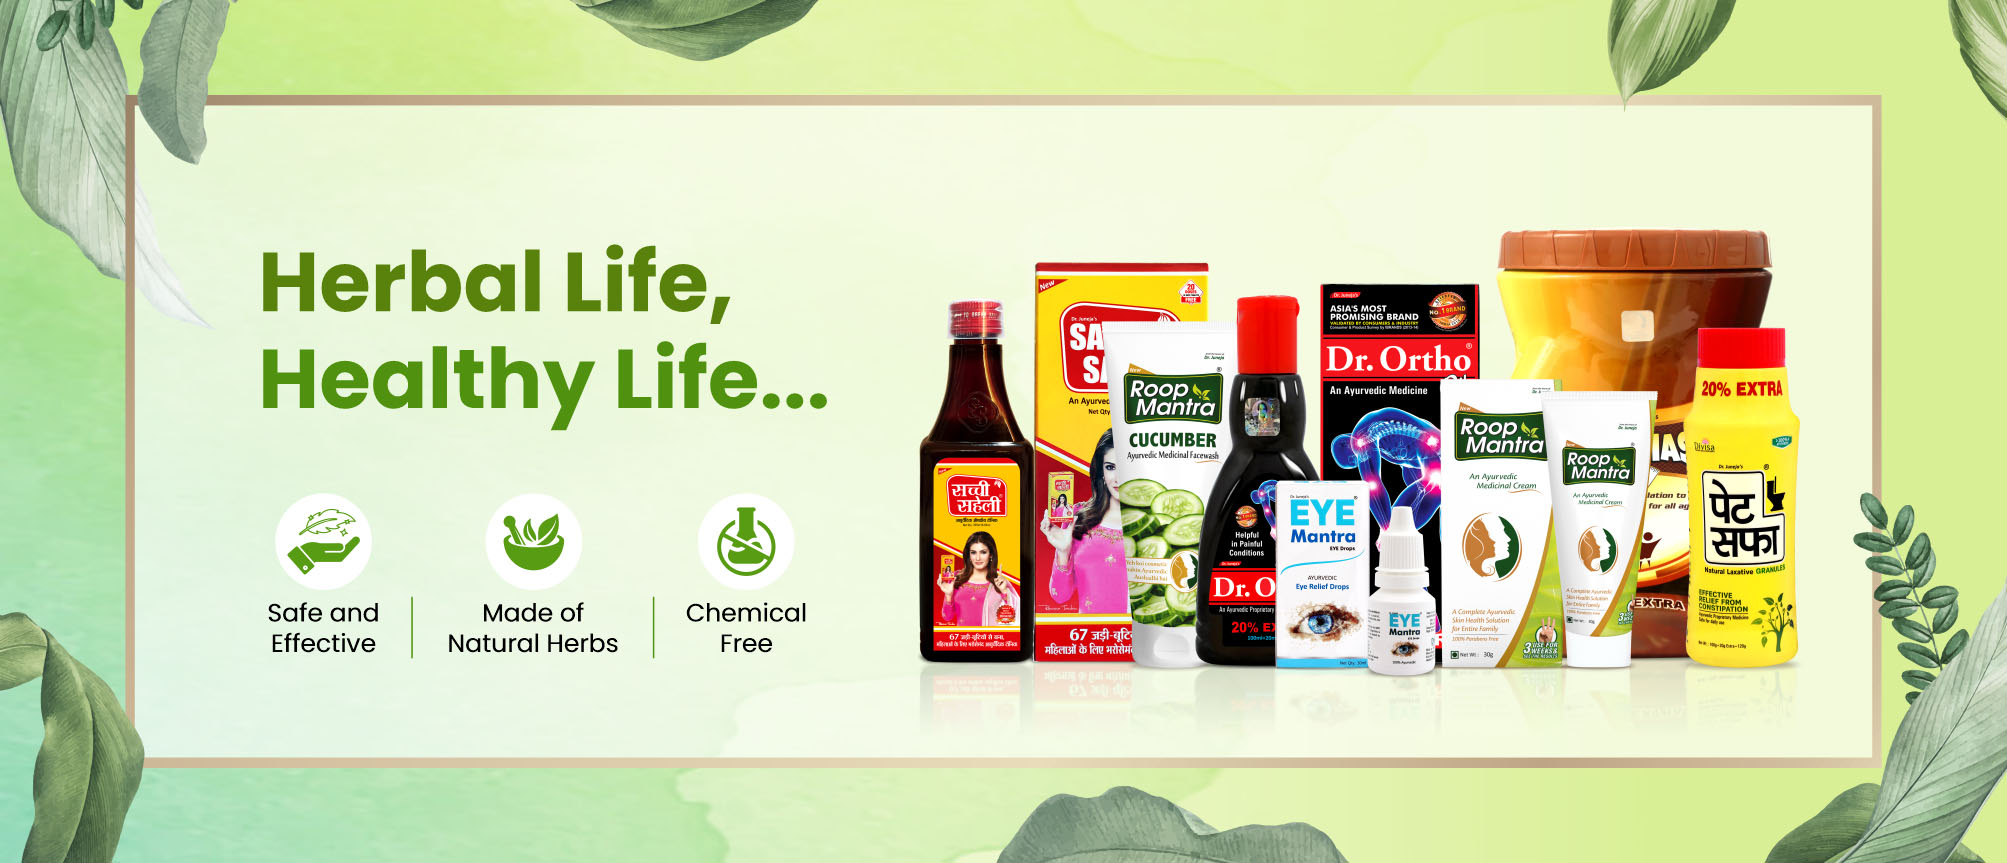 Divisa Herbals Product Range Banner